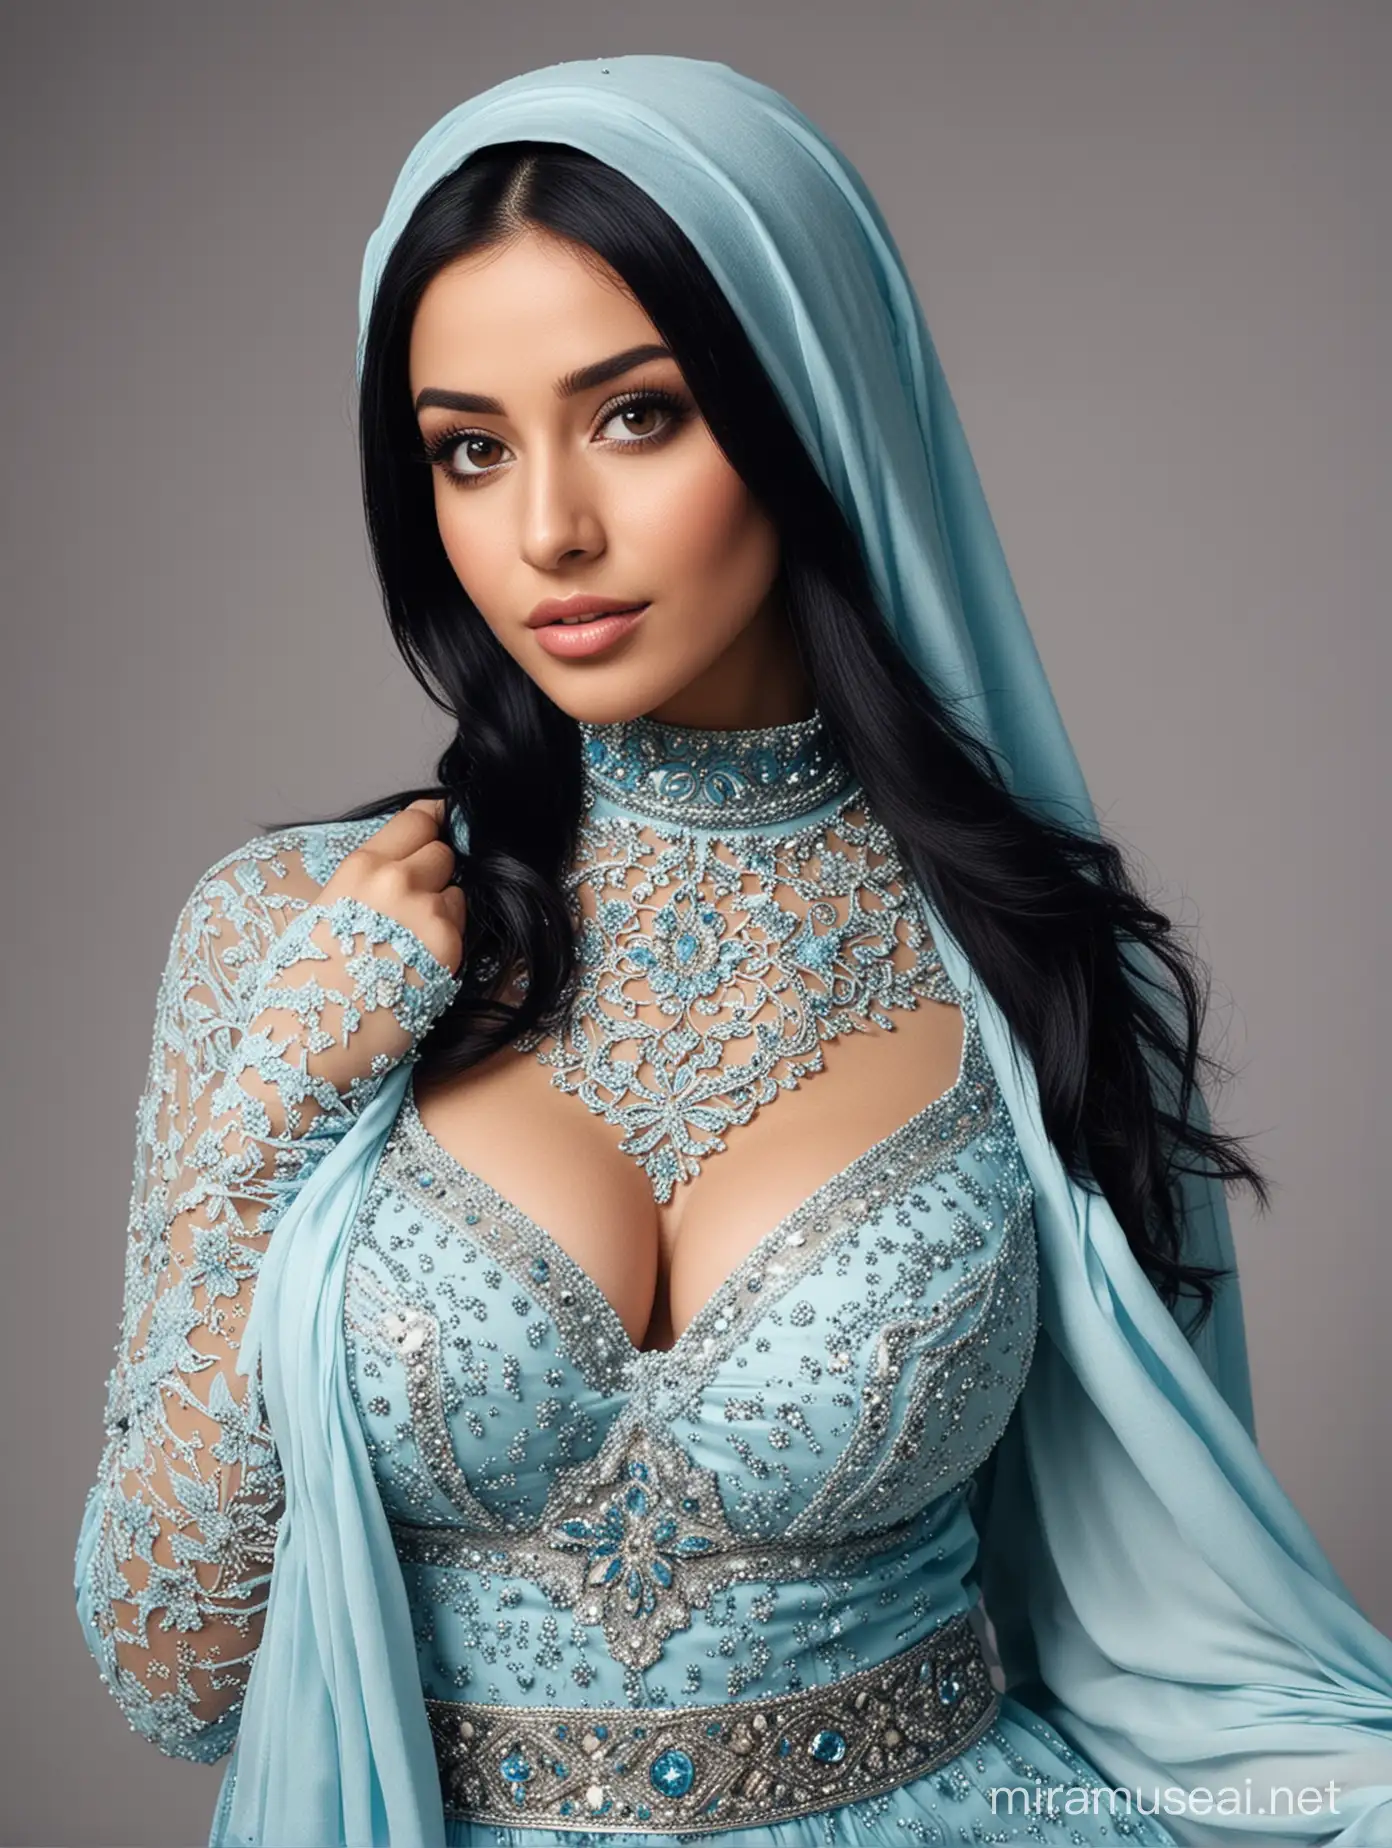 Elegant Dubai Native with Long Black Hair and Vibrant Blue Dress